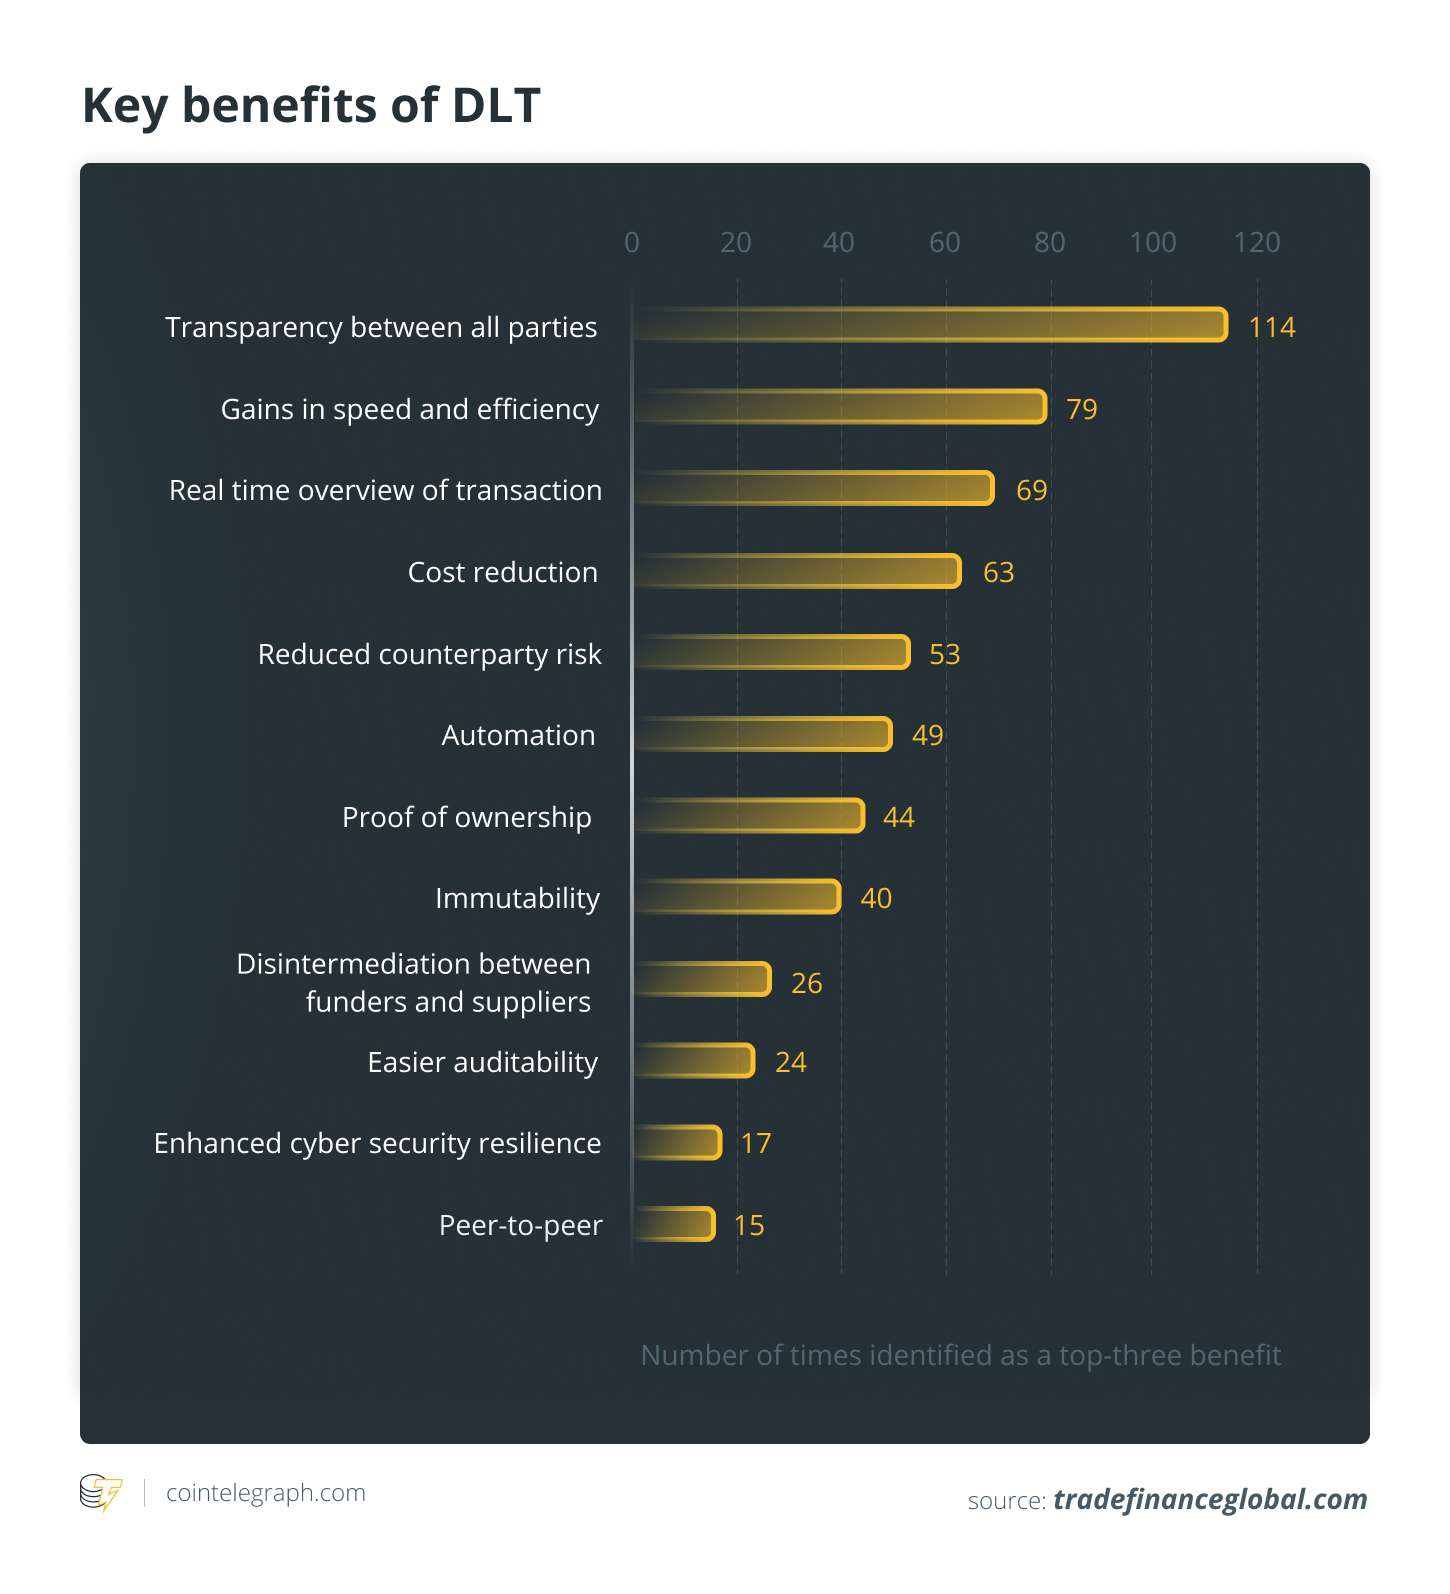 Key benefits of DLT